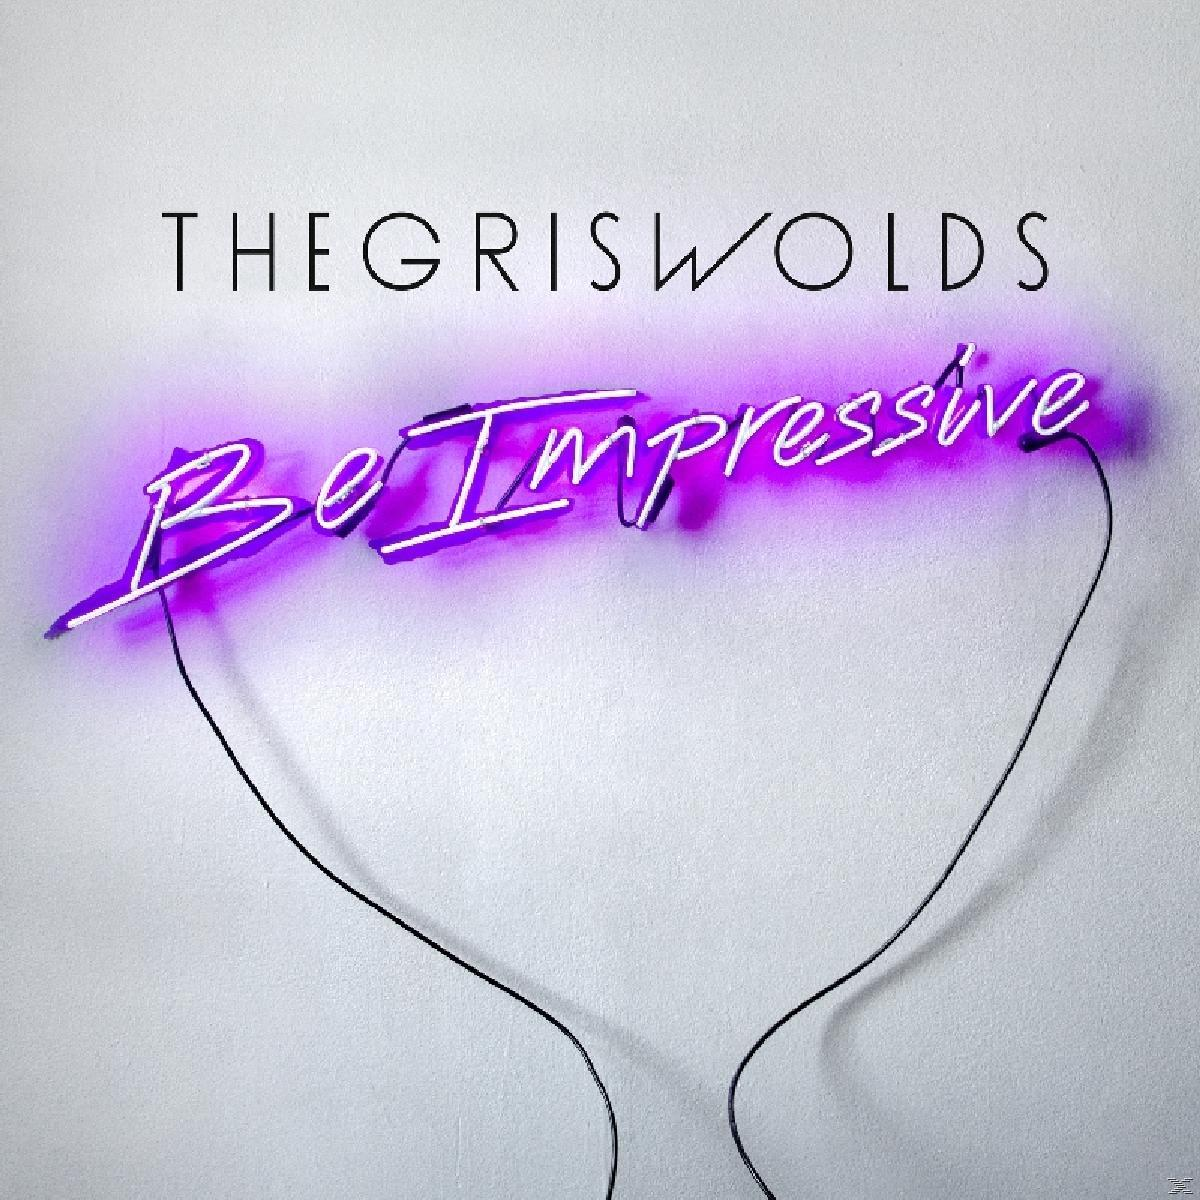 Griswolds - Be Impressive - (CD)